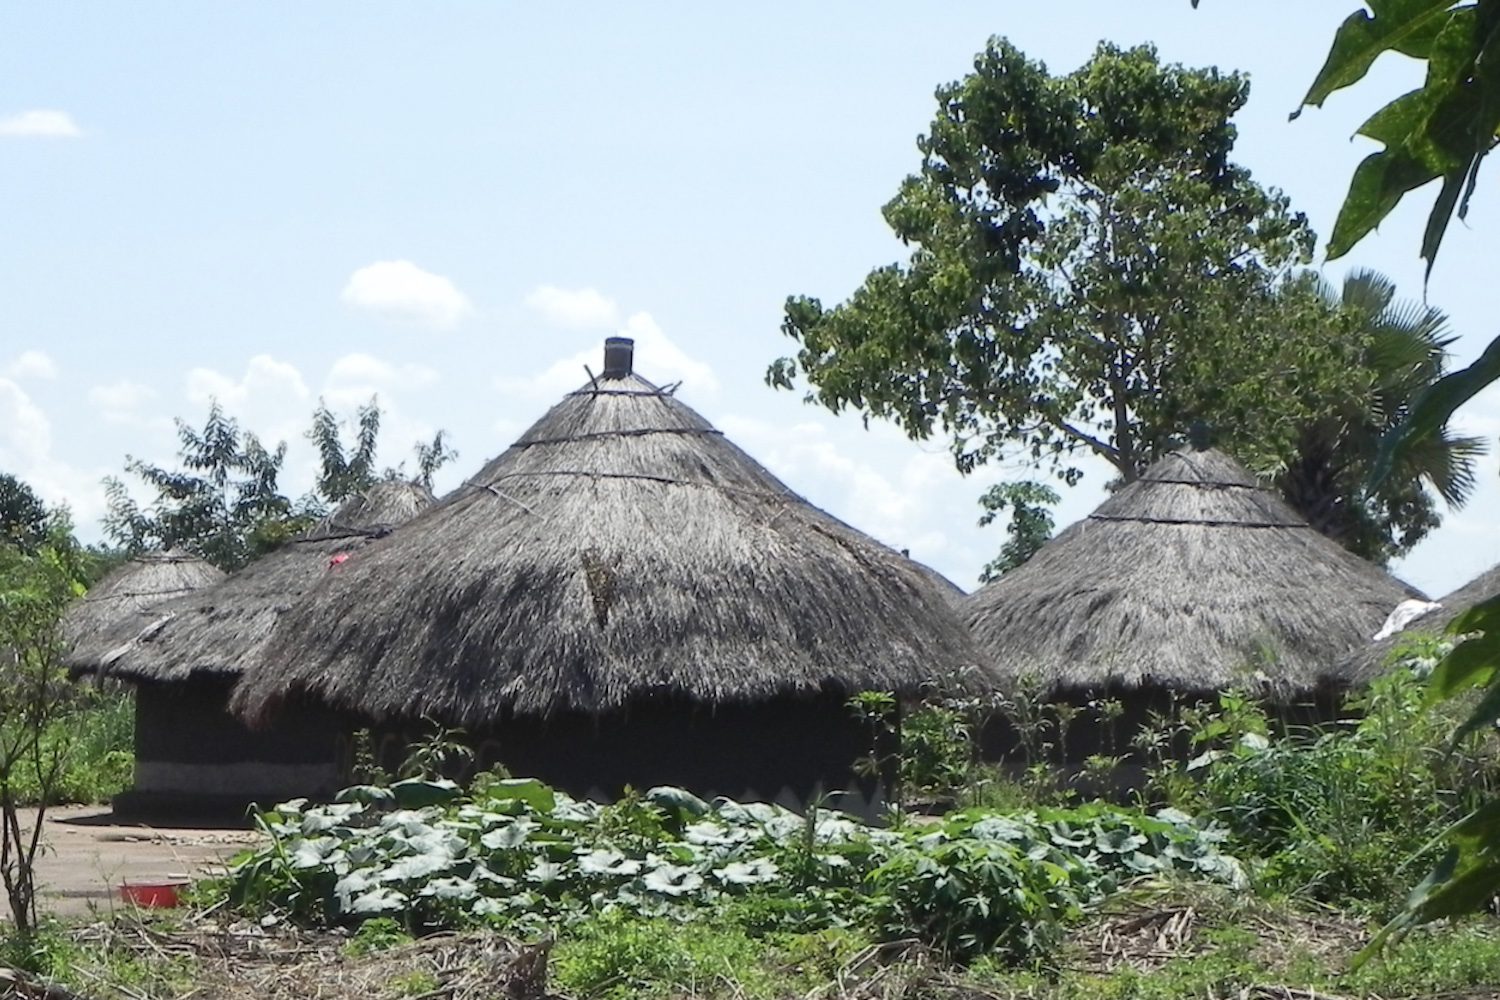 Uganda-Hut-Landscape-1-1